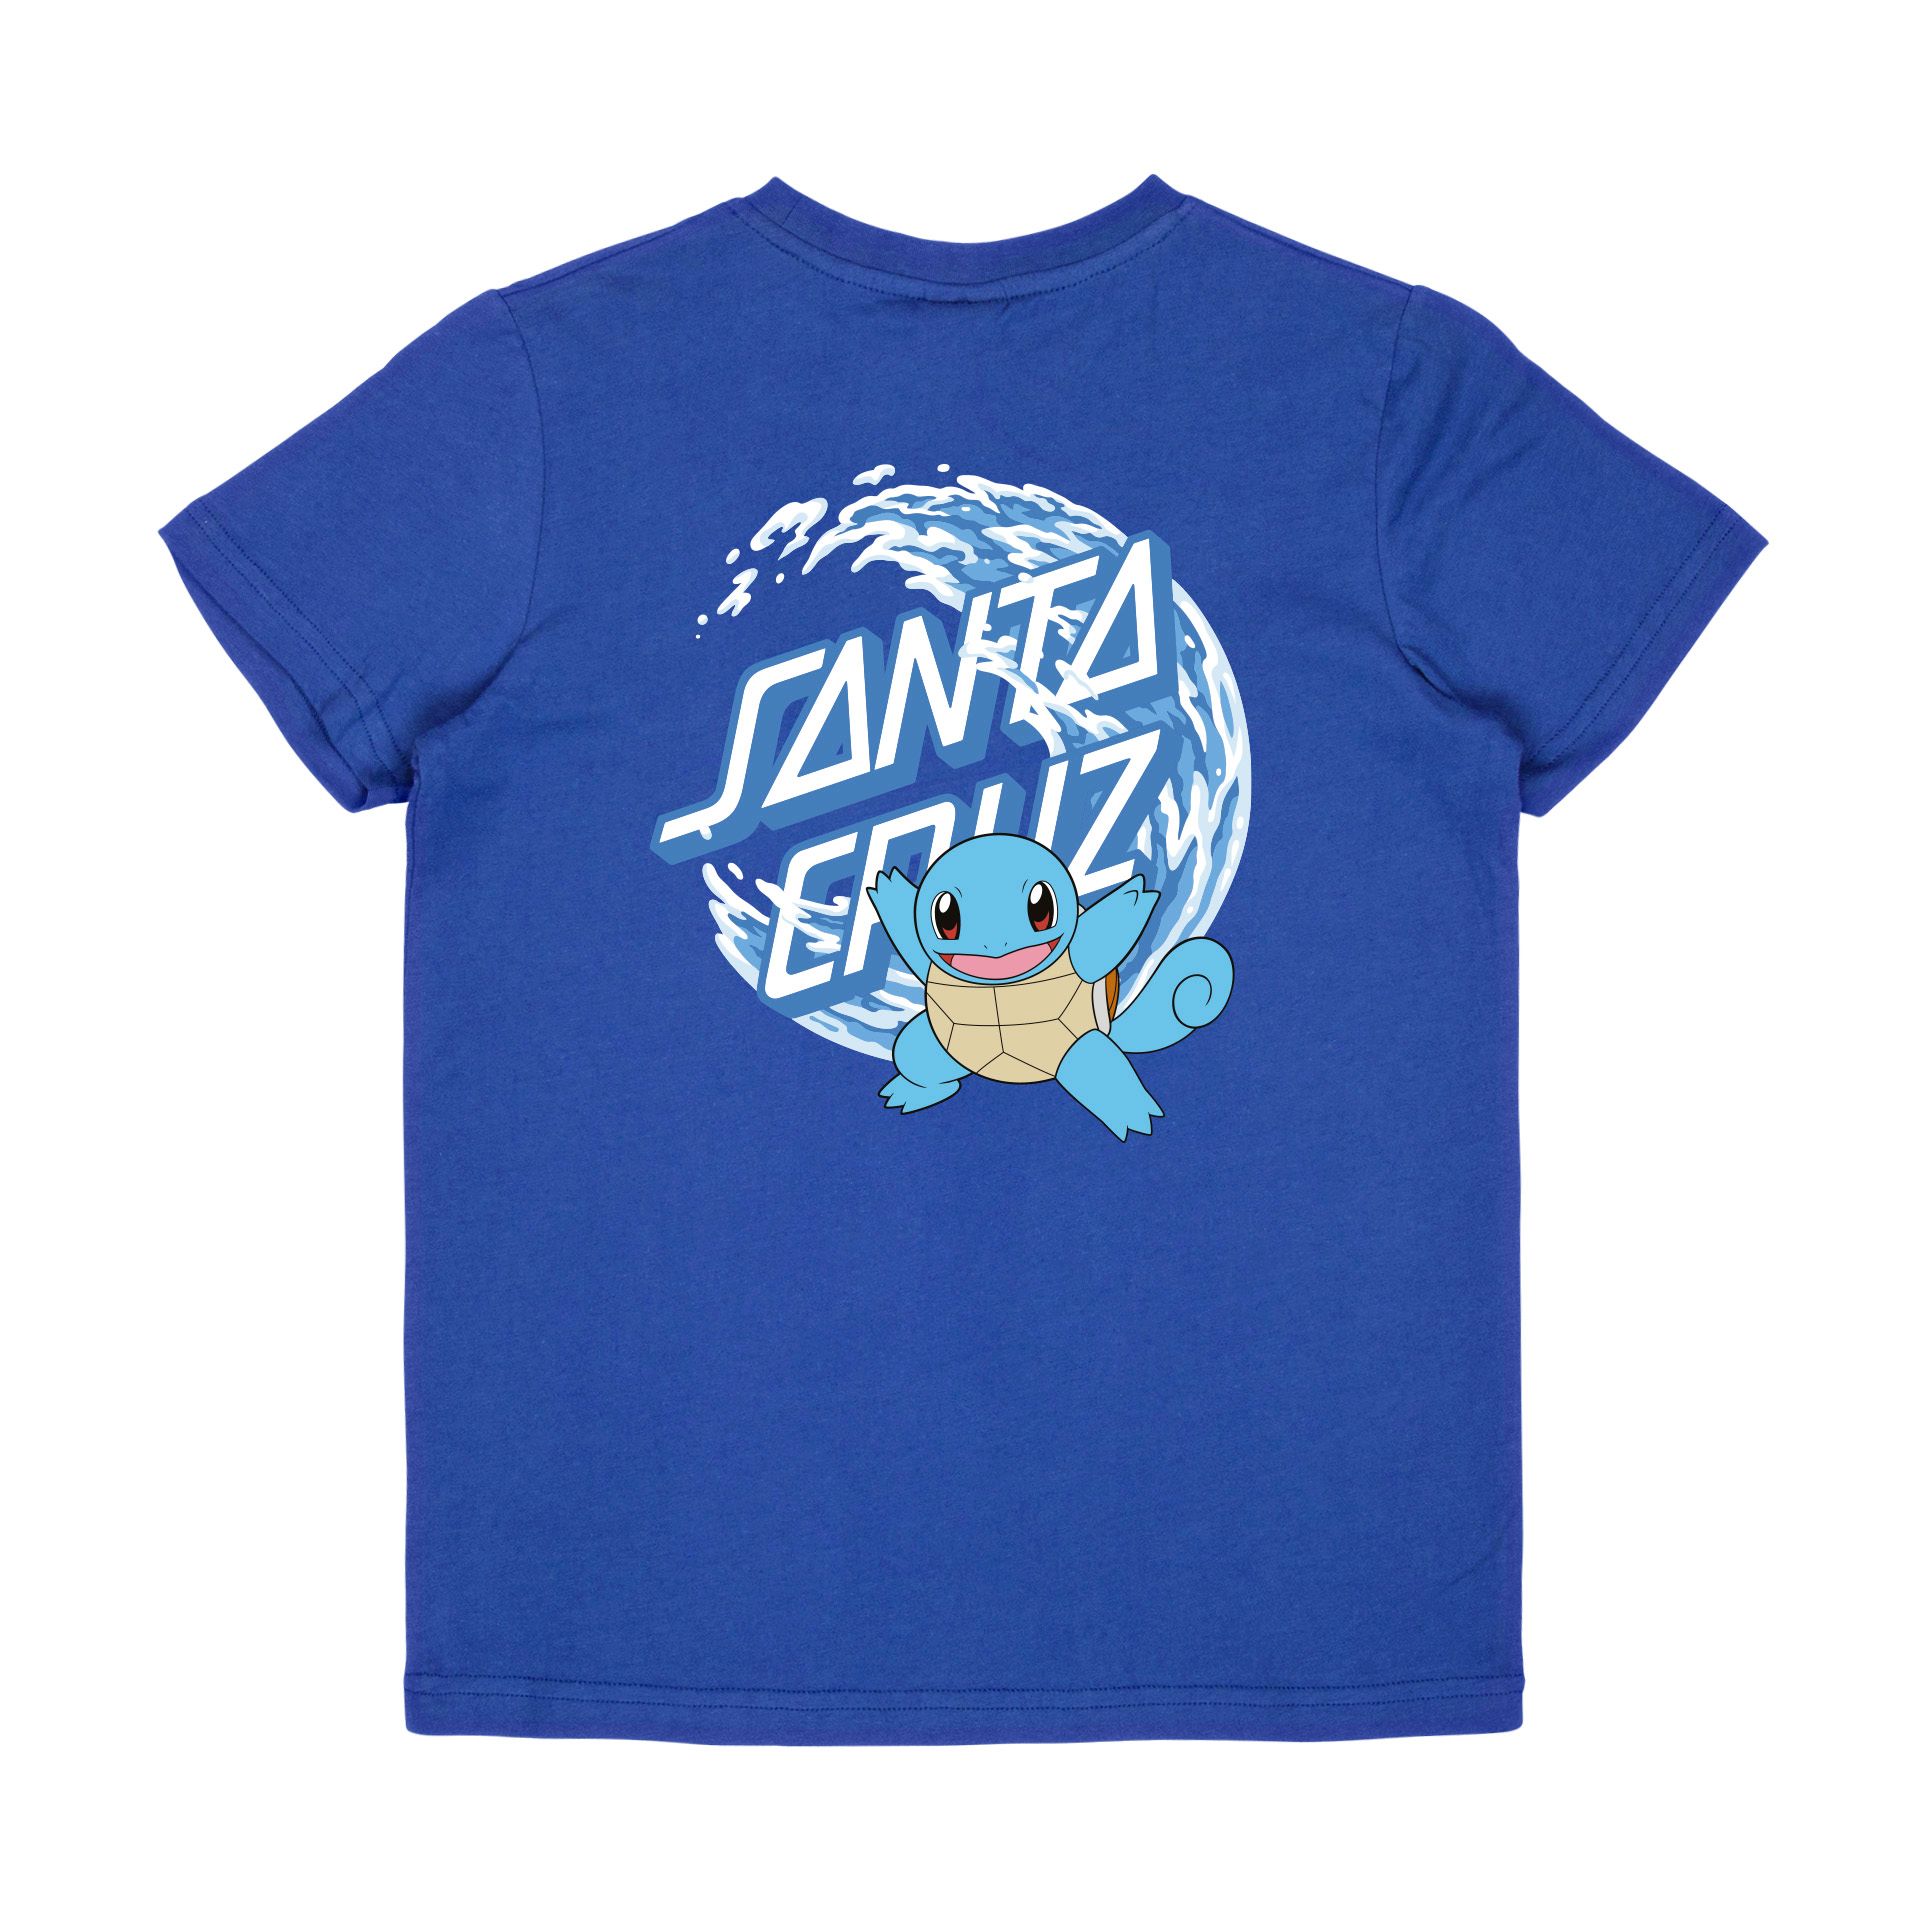 Santa Cruz Squirtle youth t-shirt royal blue